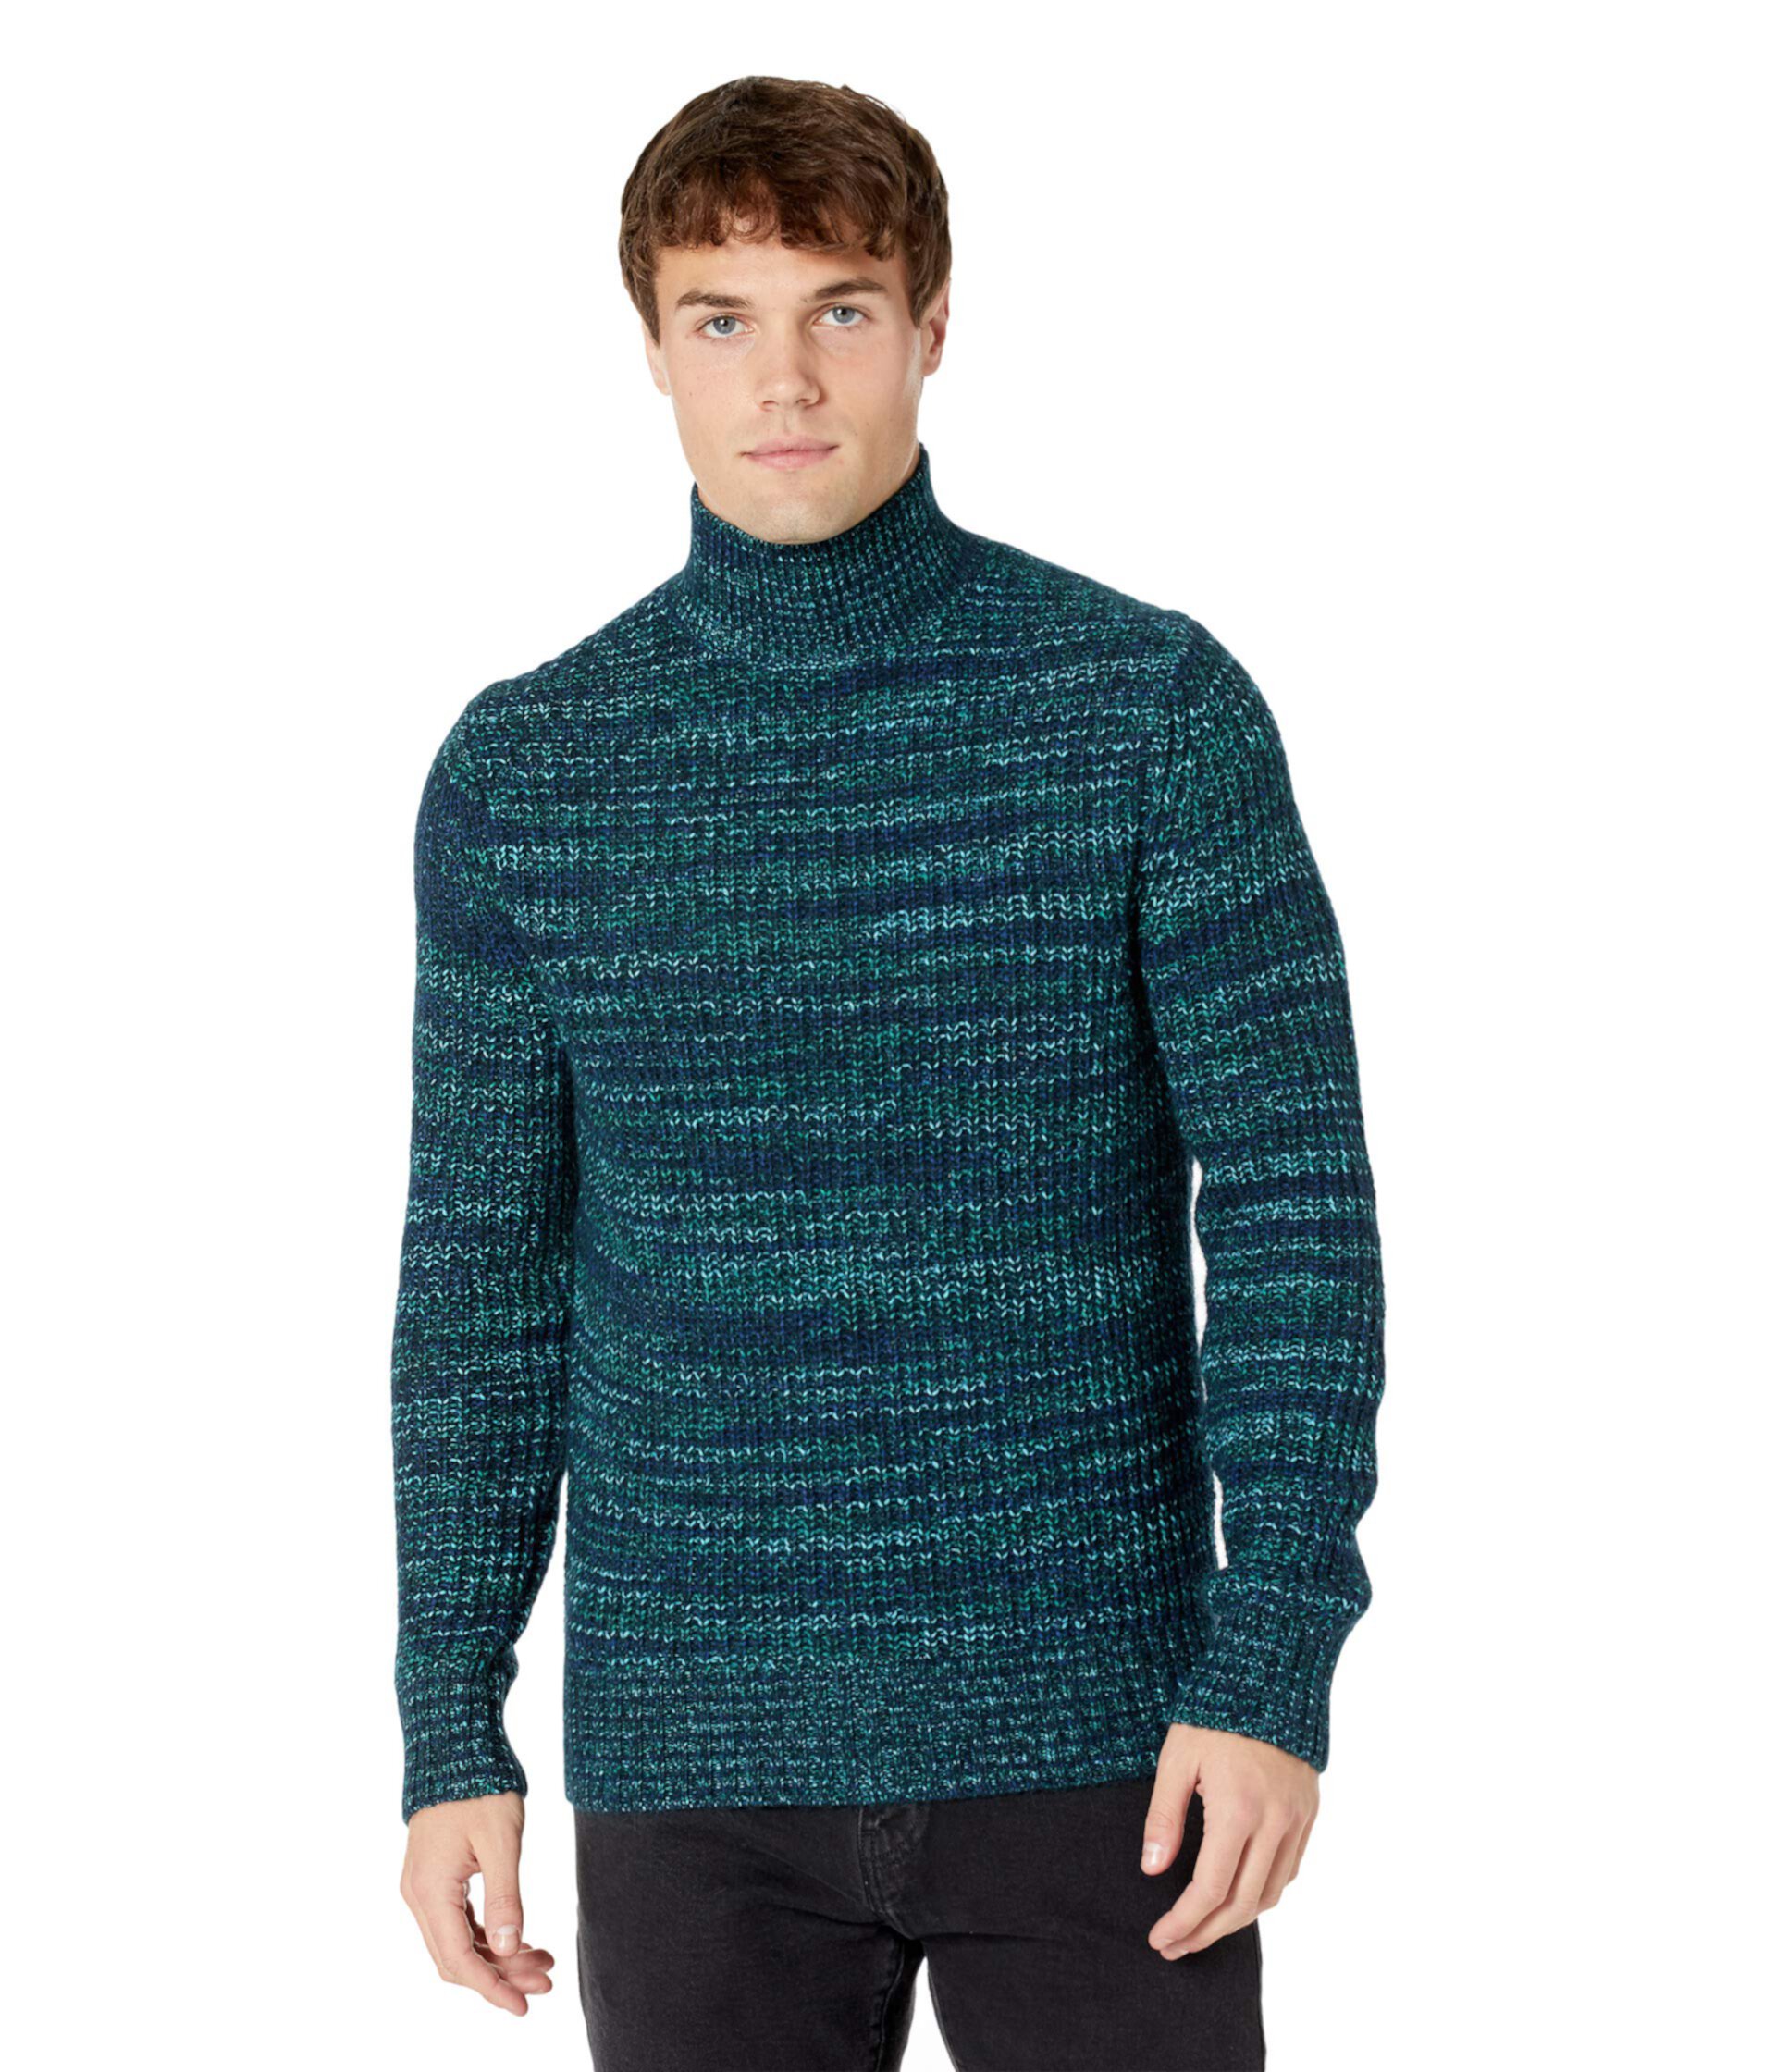 Spacedye Turtleneck Sweater Vince